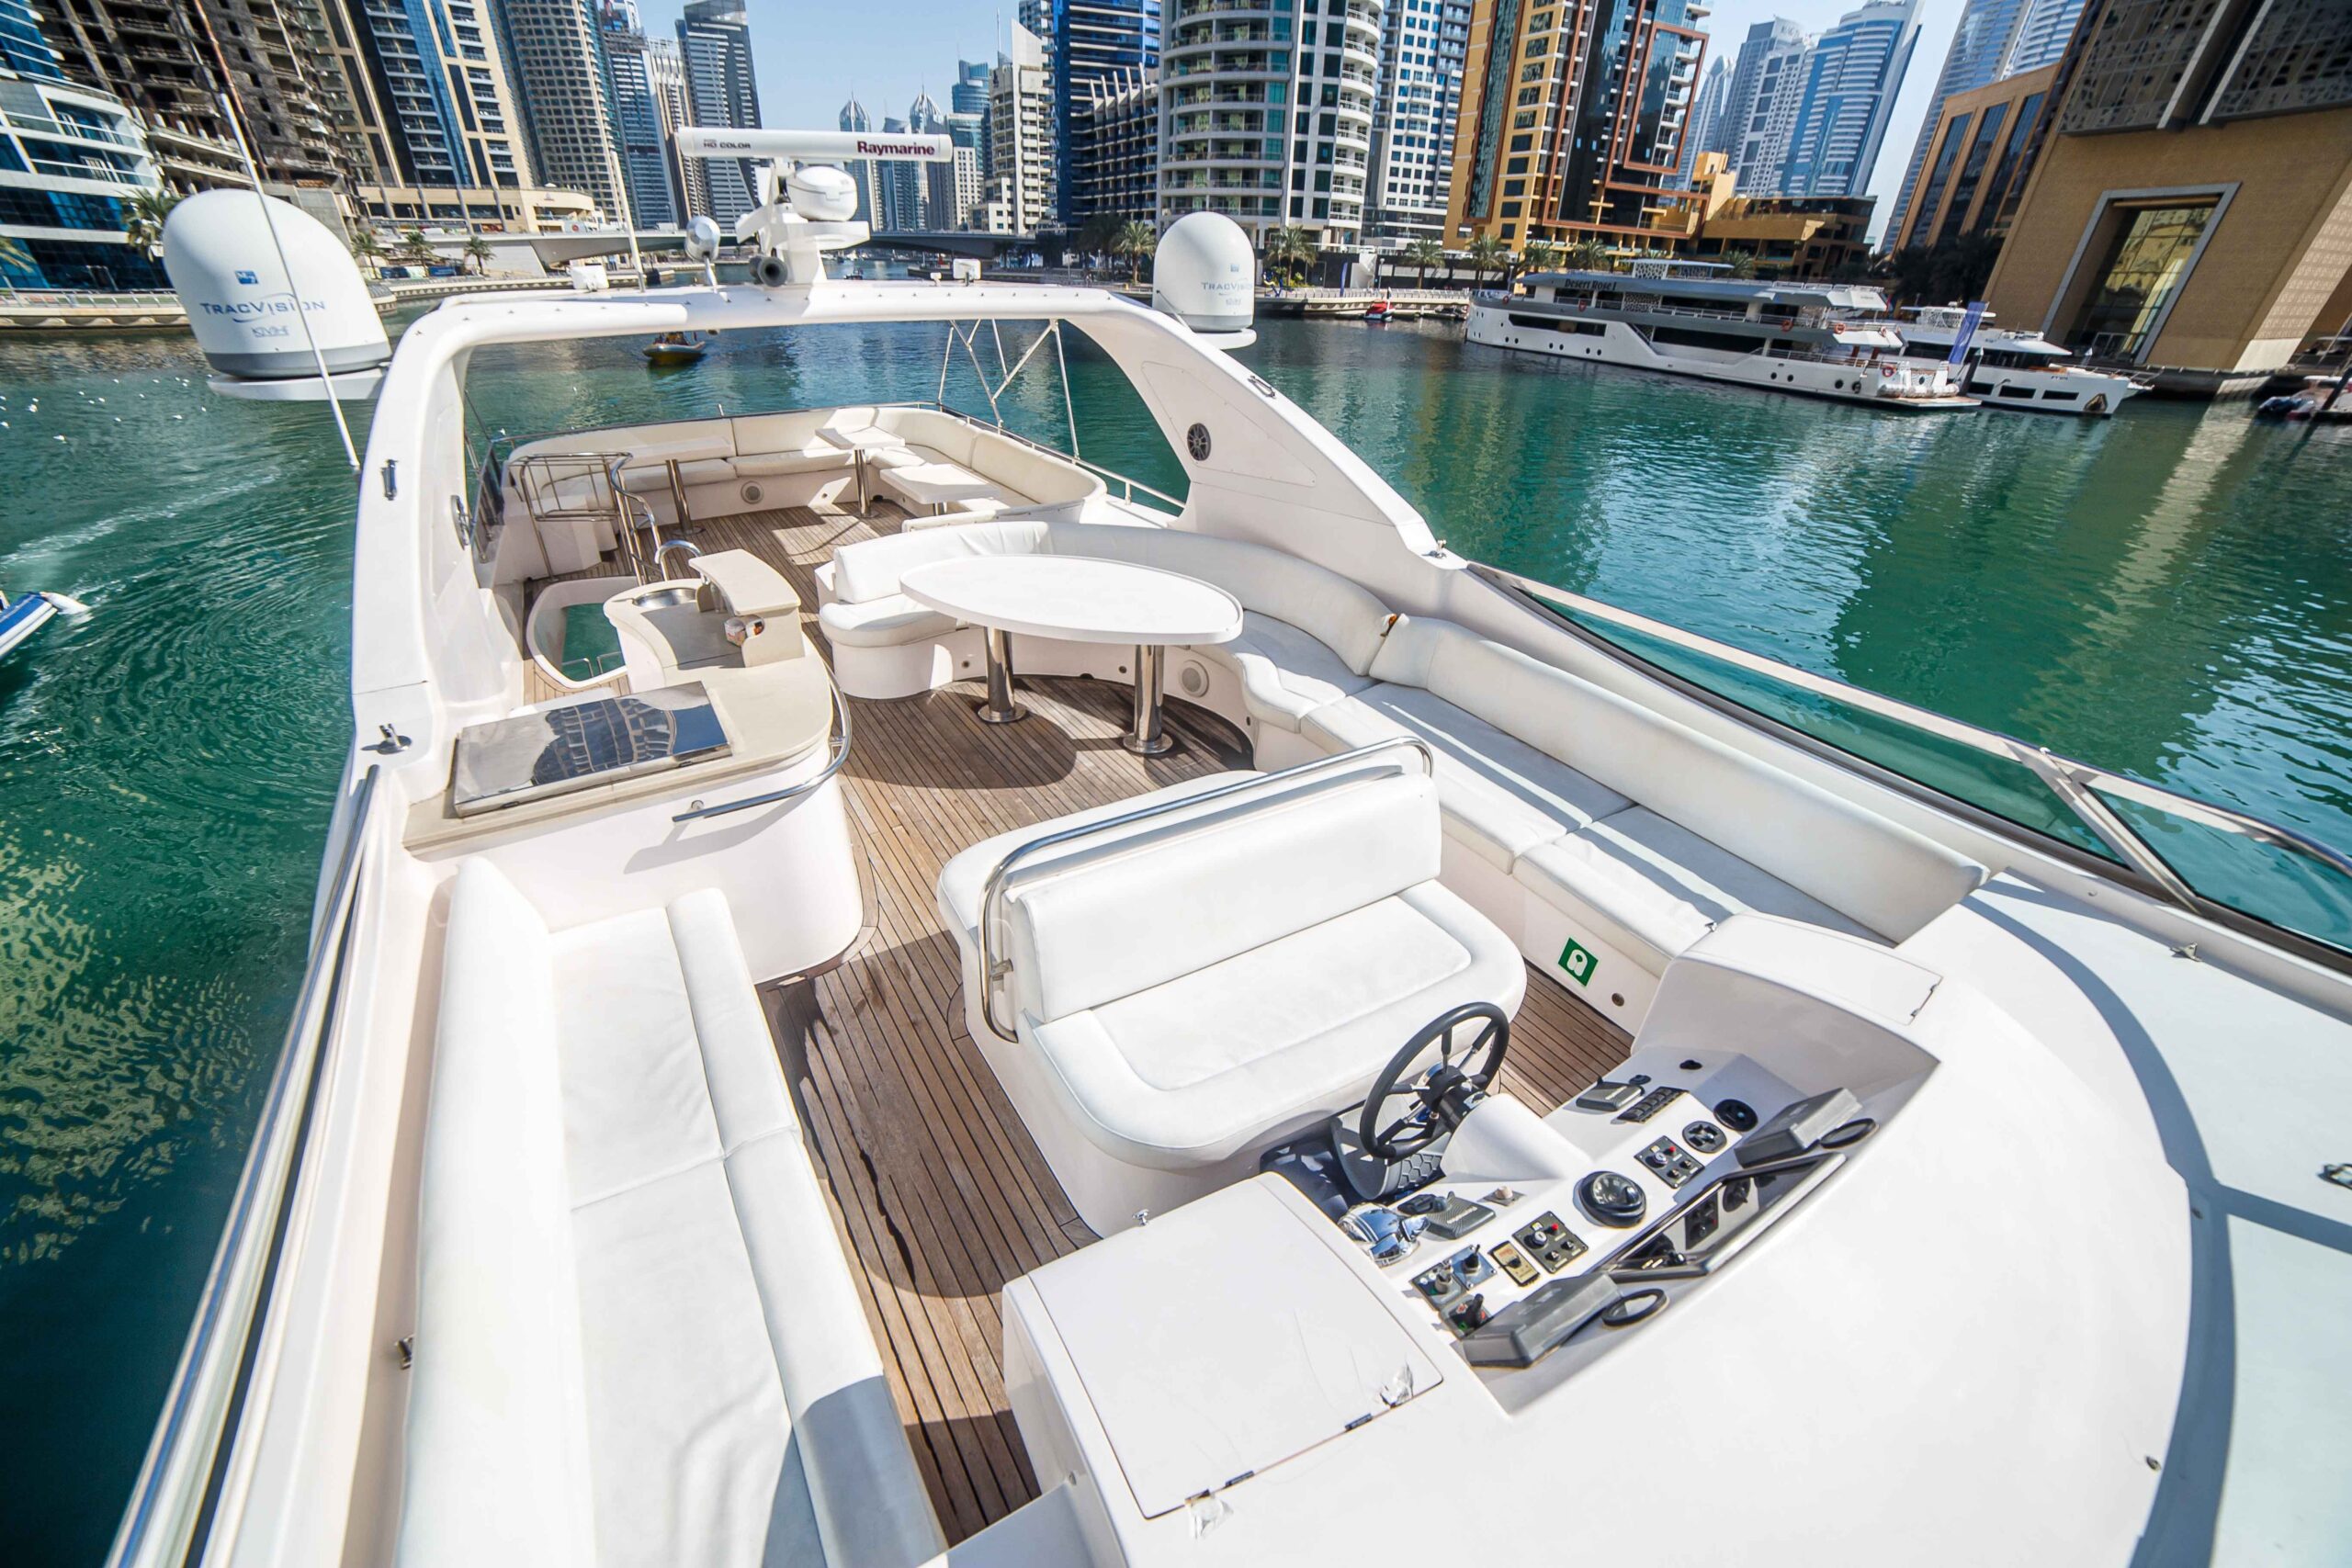 Voyager Elite Maestro 88ft Yacht private yacht Dubai